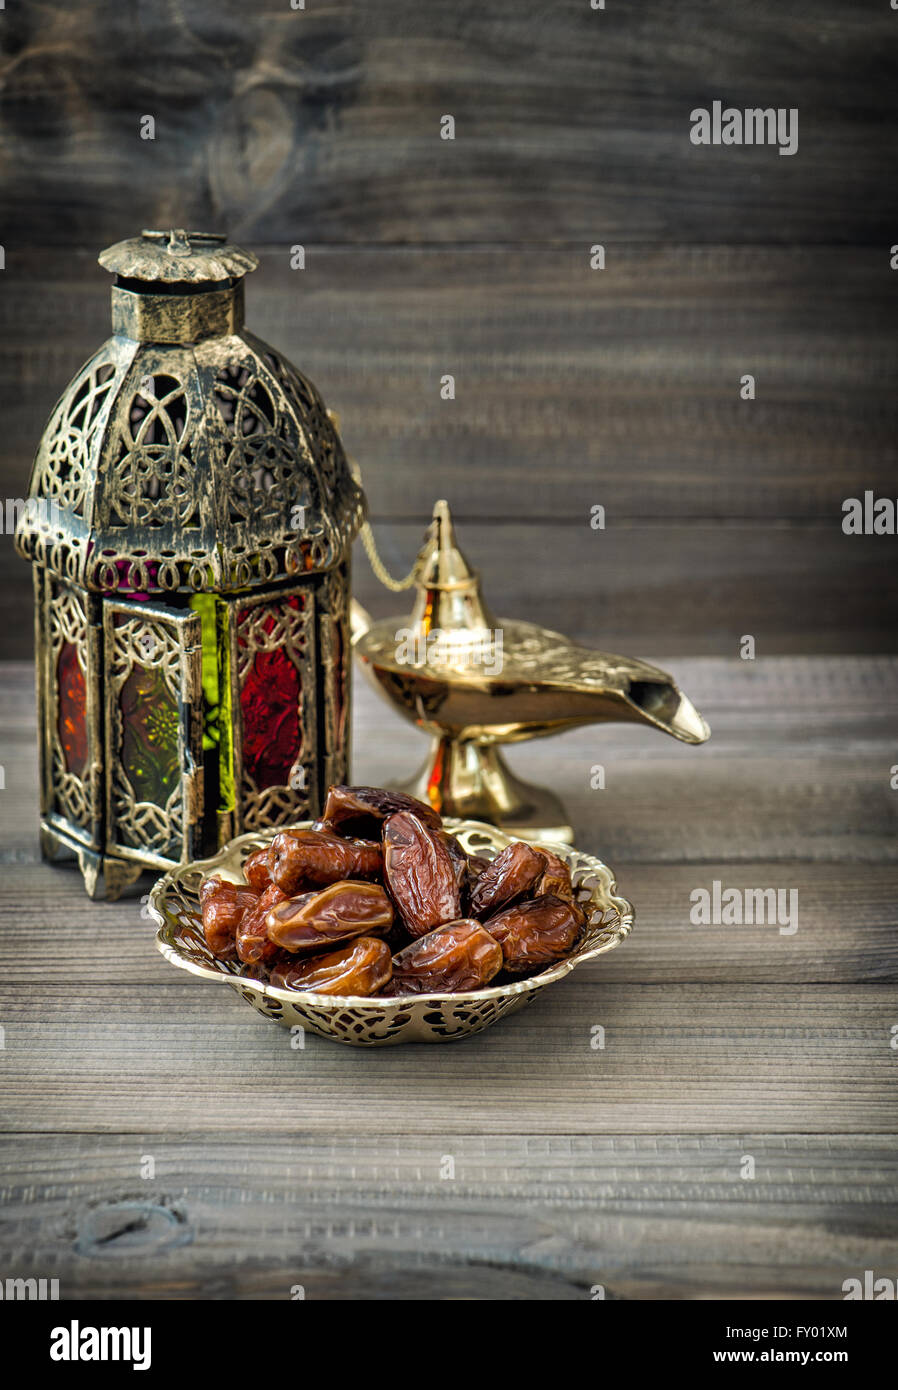 Arabian lantern, golden lamp, fruits. Vintage style toned picture Stock Photo